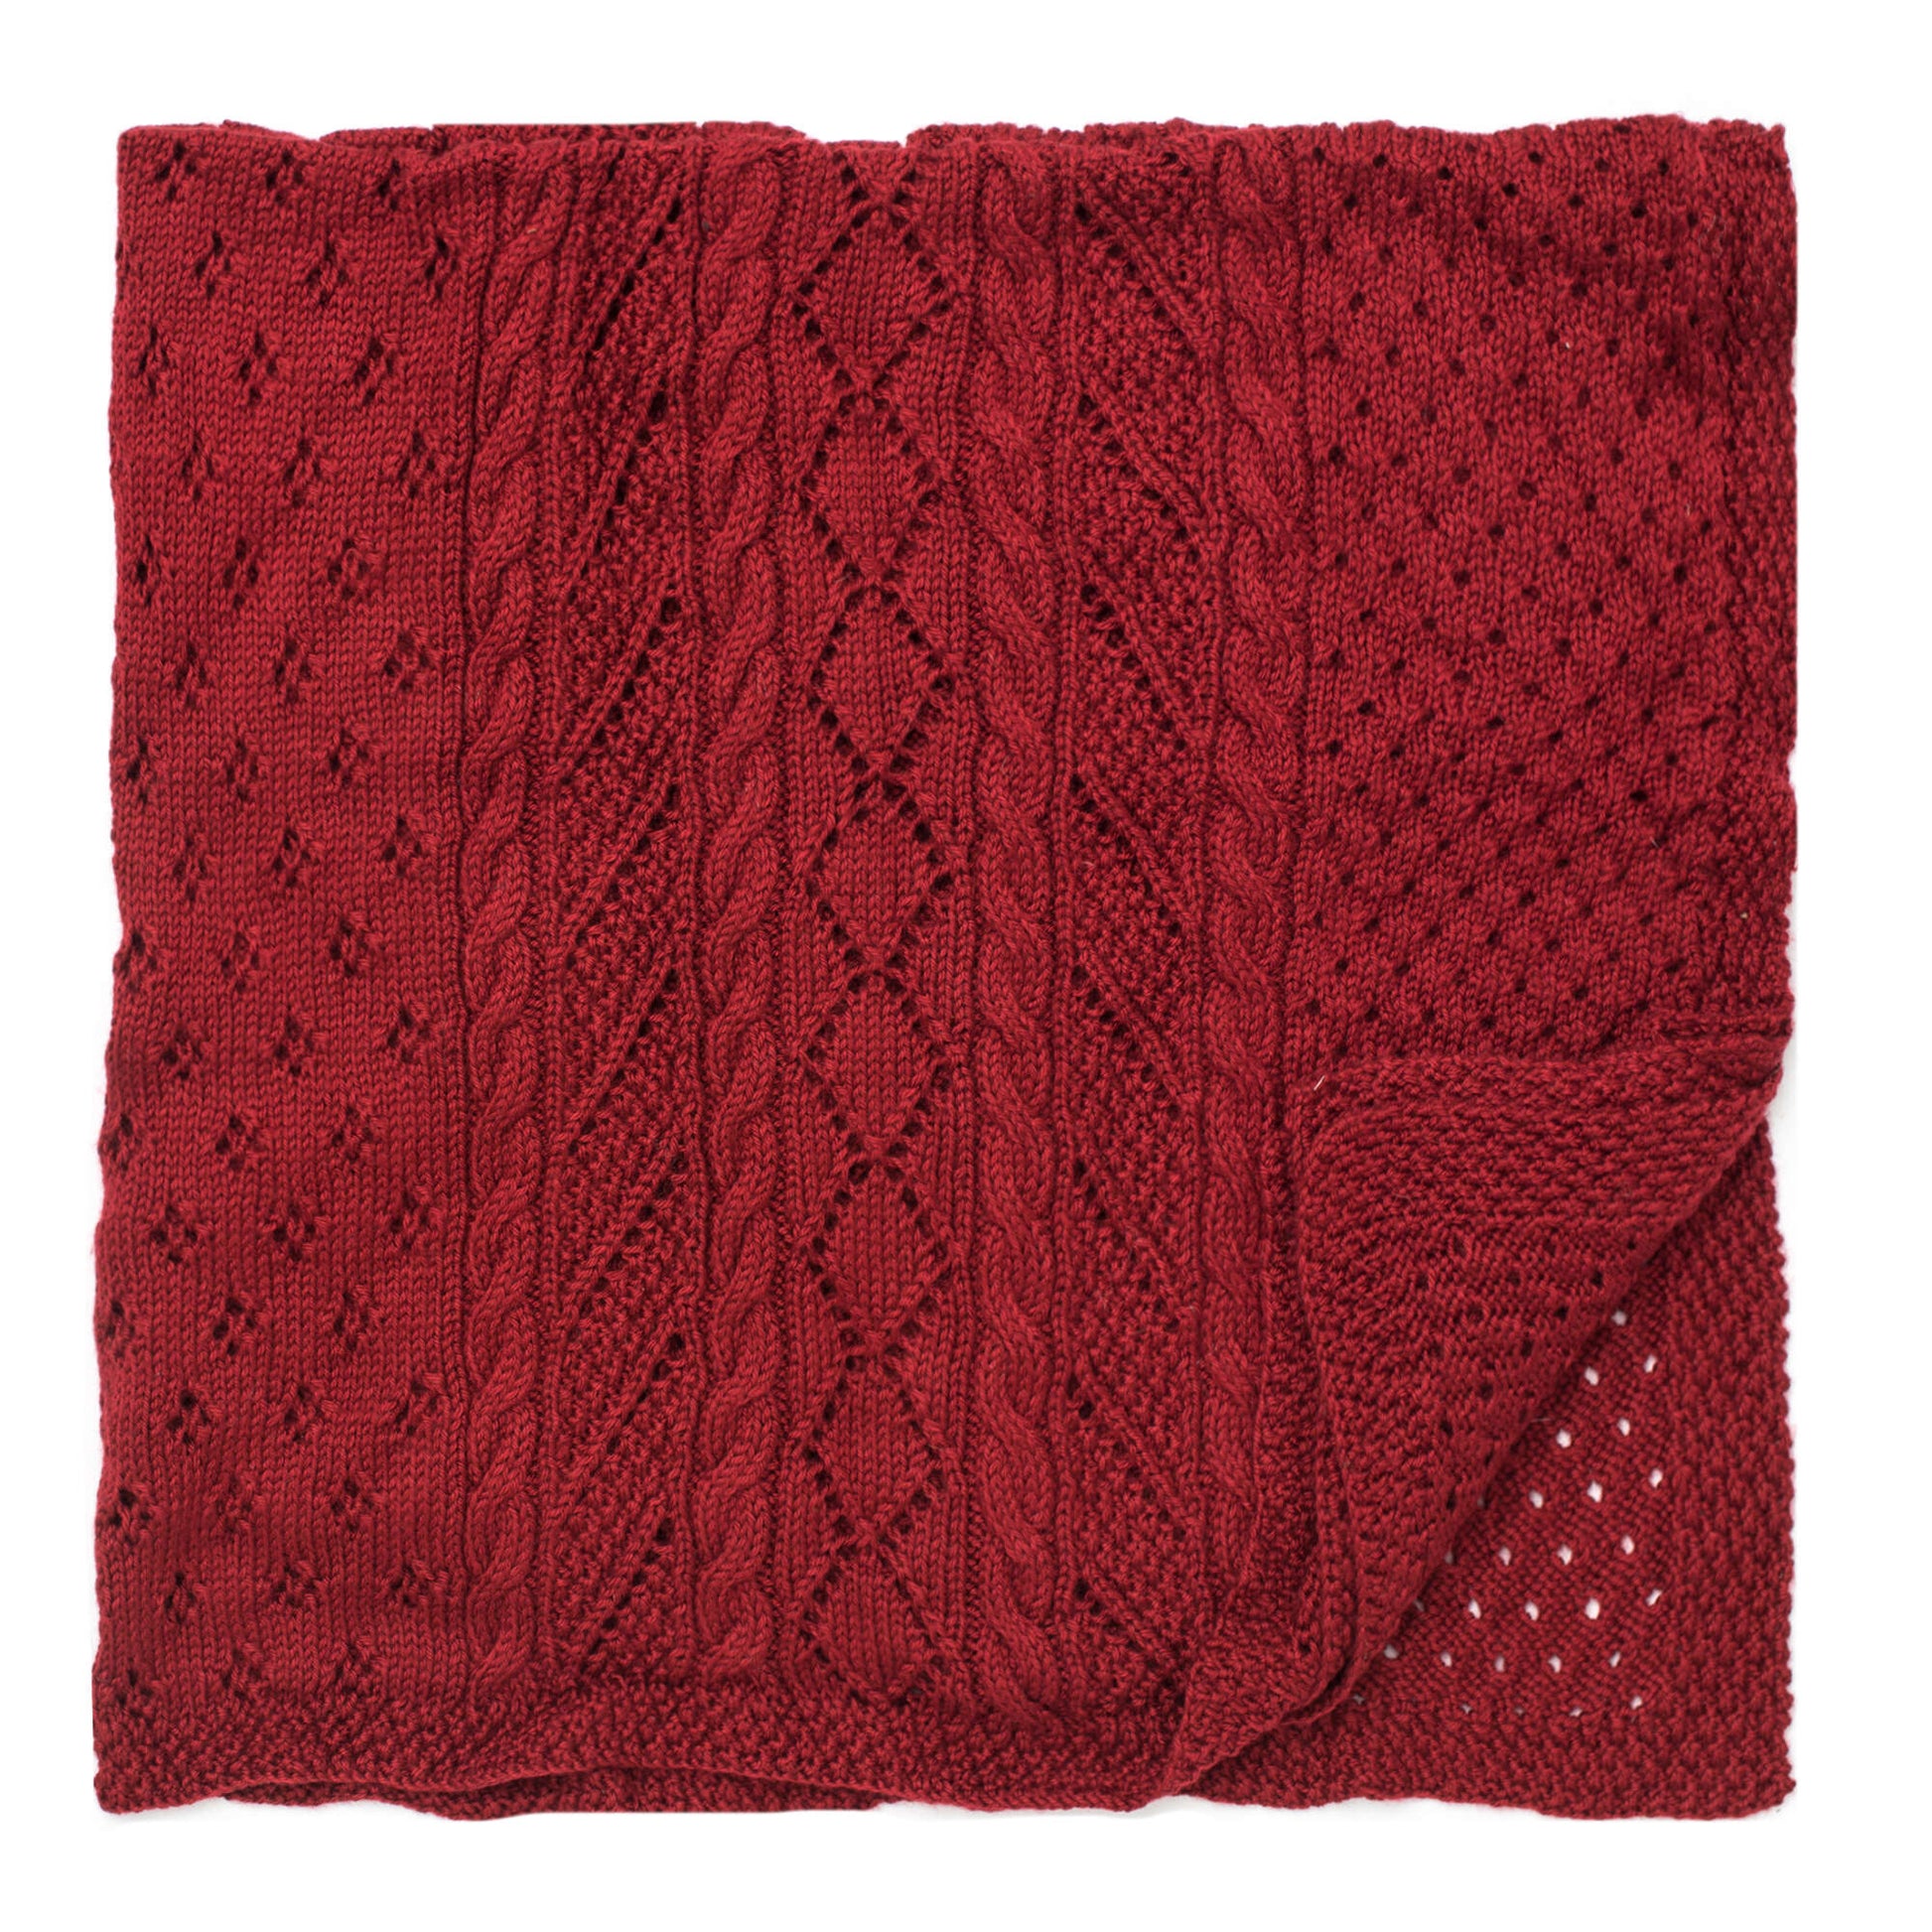 Free Caron Knit Lace Panel Throw Pattern